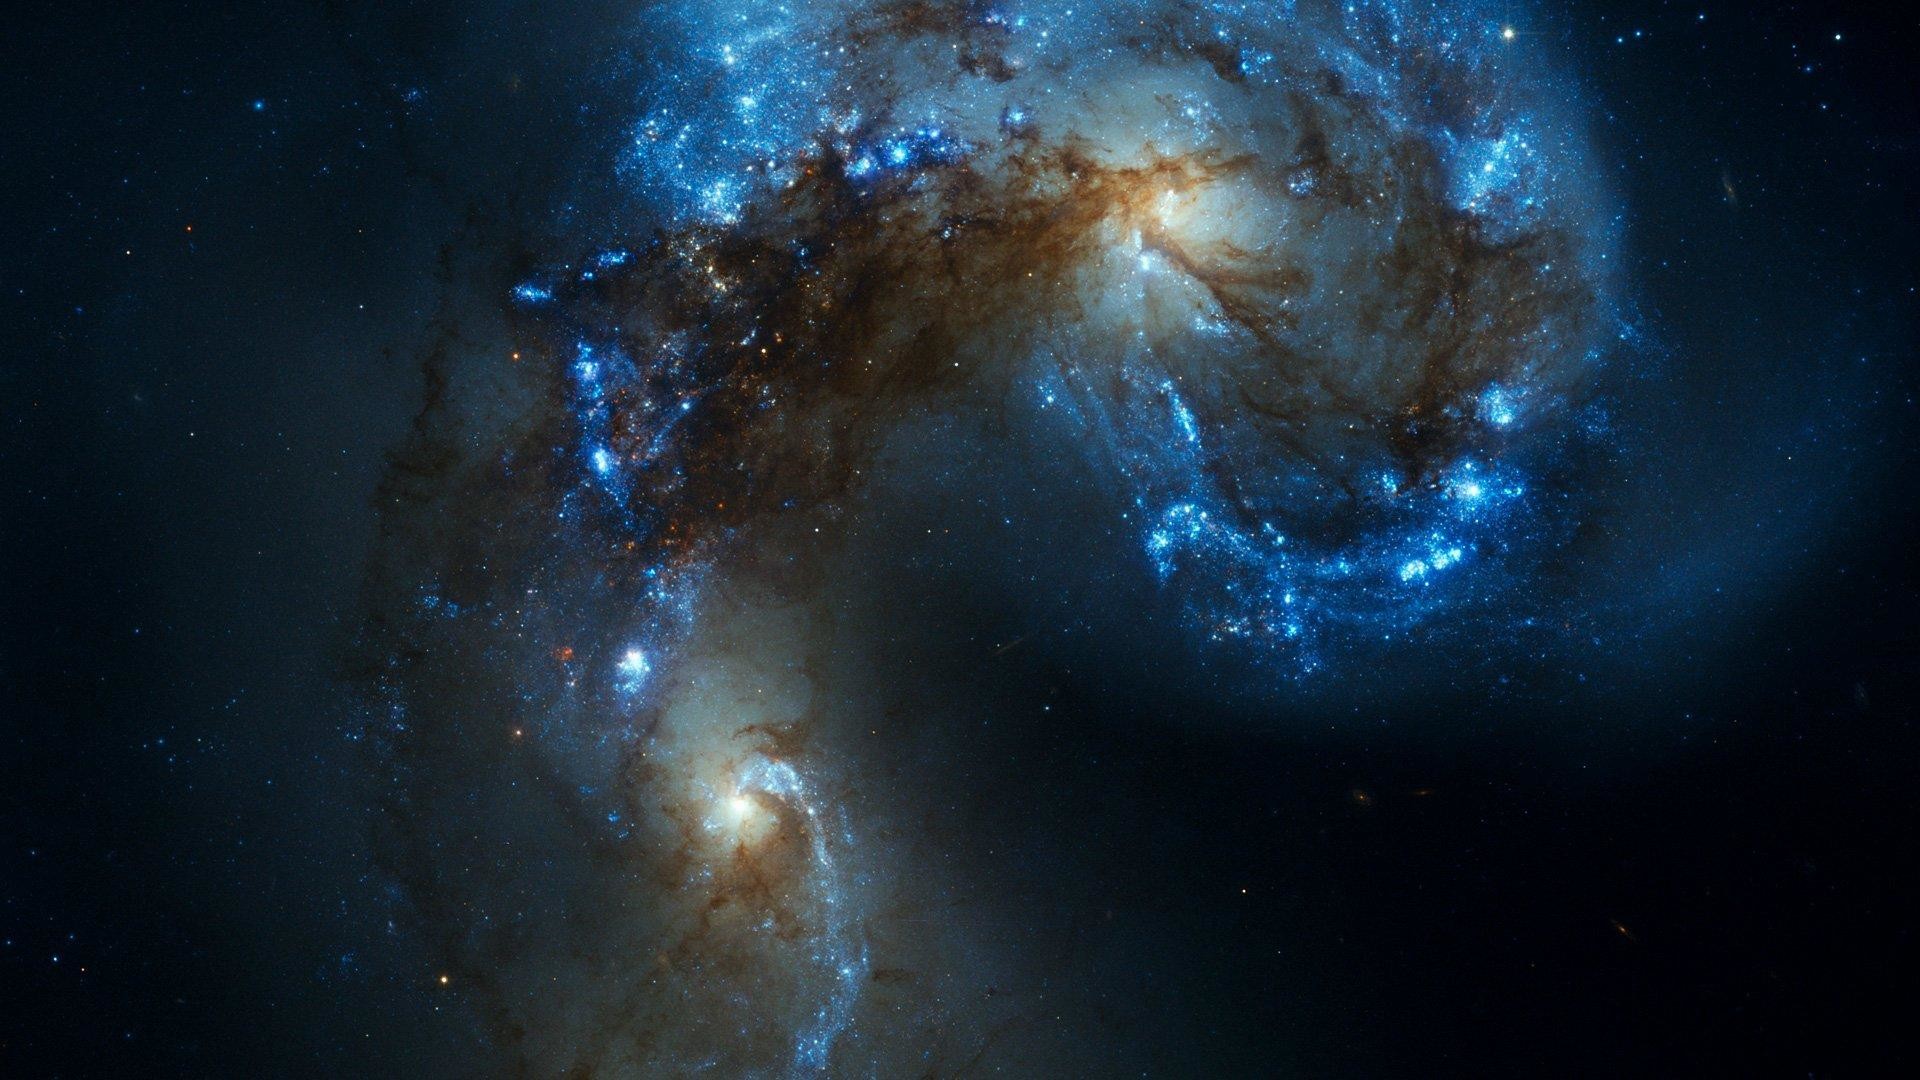 wallpaper.wiki-Hubble-HD-Wallpapers-1920×1080-PIC-WPD007973